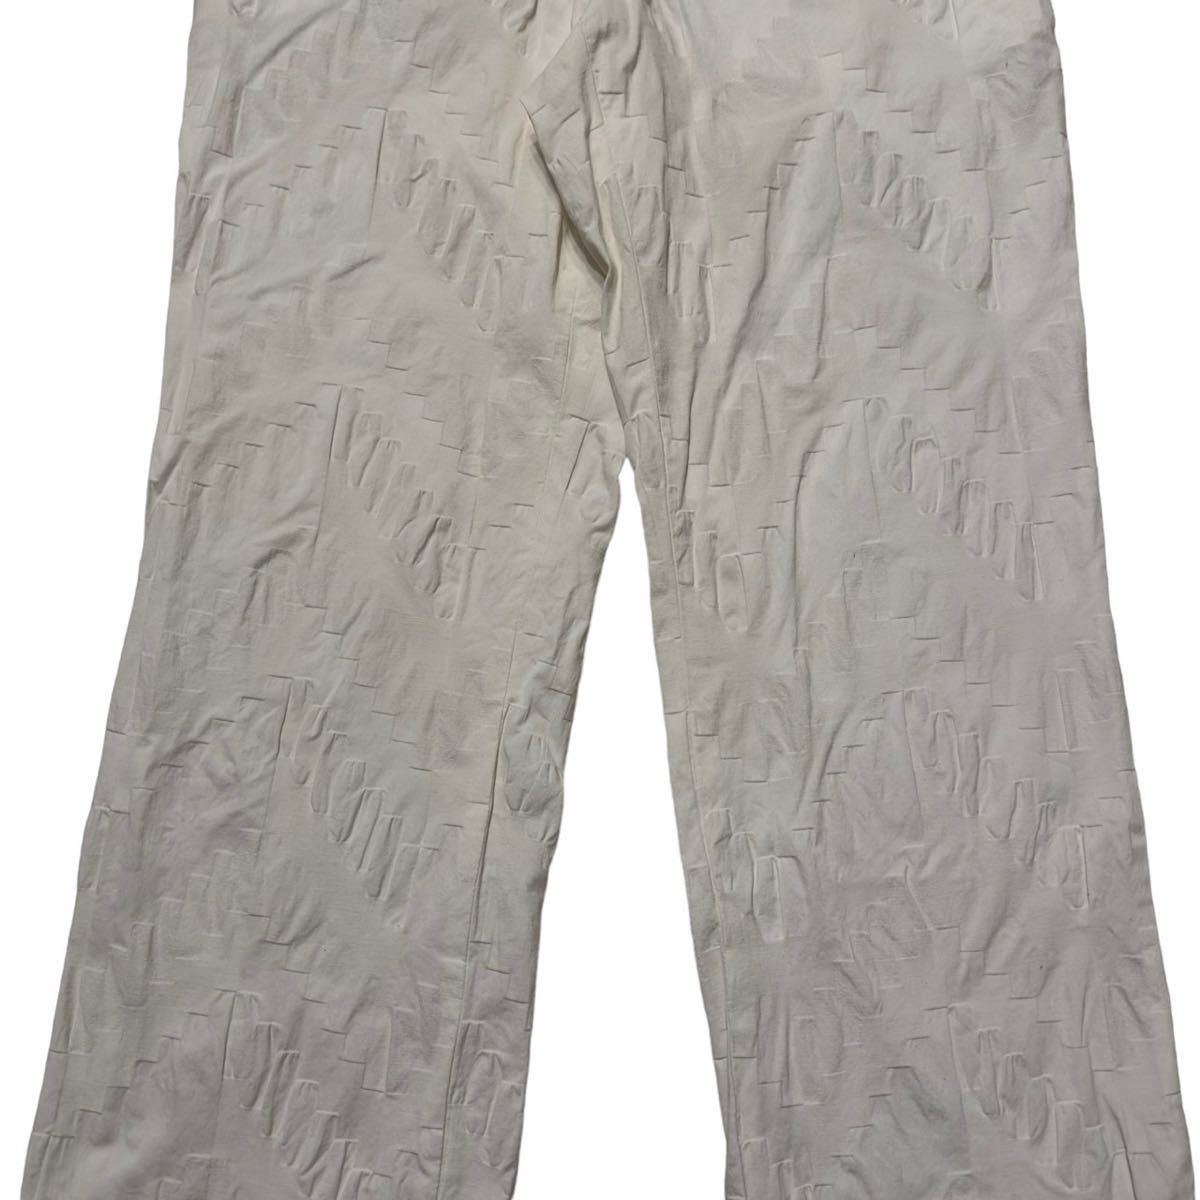 Rare ISSEY MIYAKE 2000AW 3D patterned pants archive comme des garcons yohji yamamoto rei kawakubo white japanese label_画像2